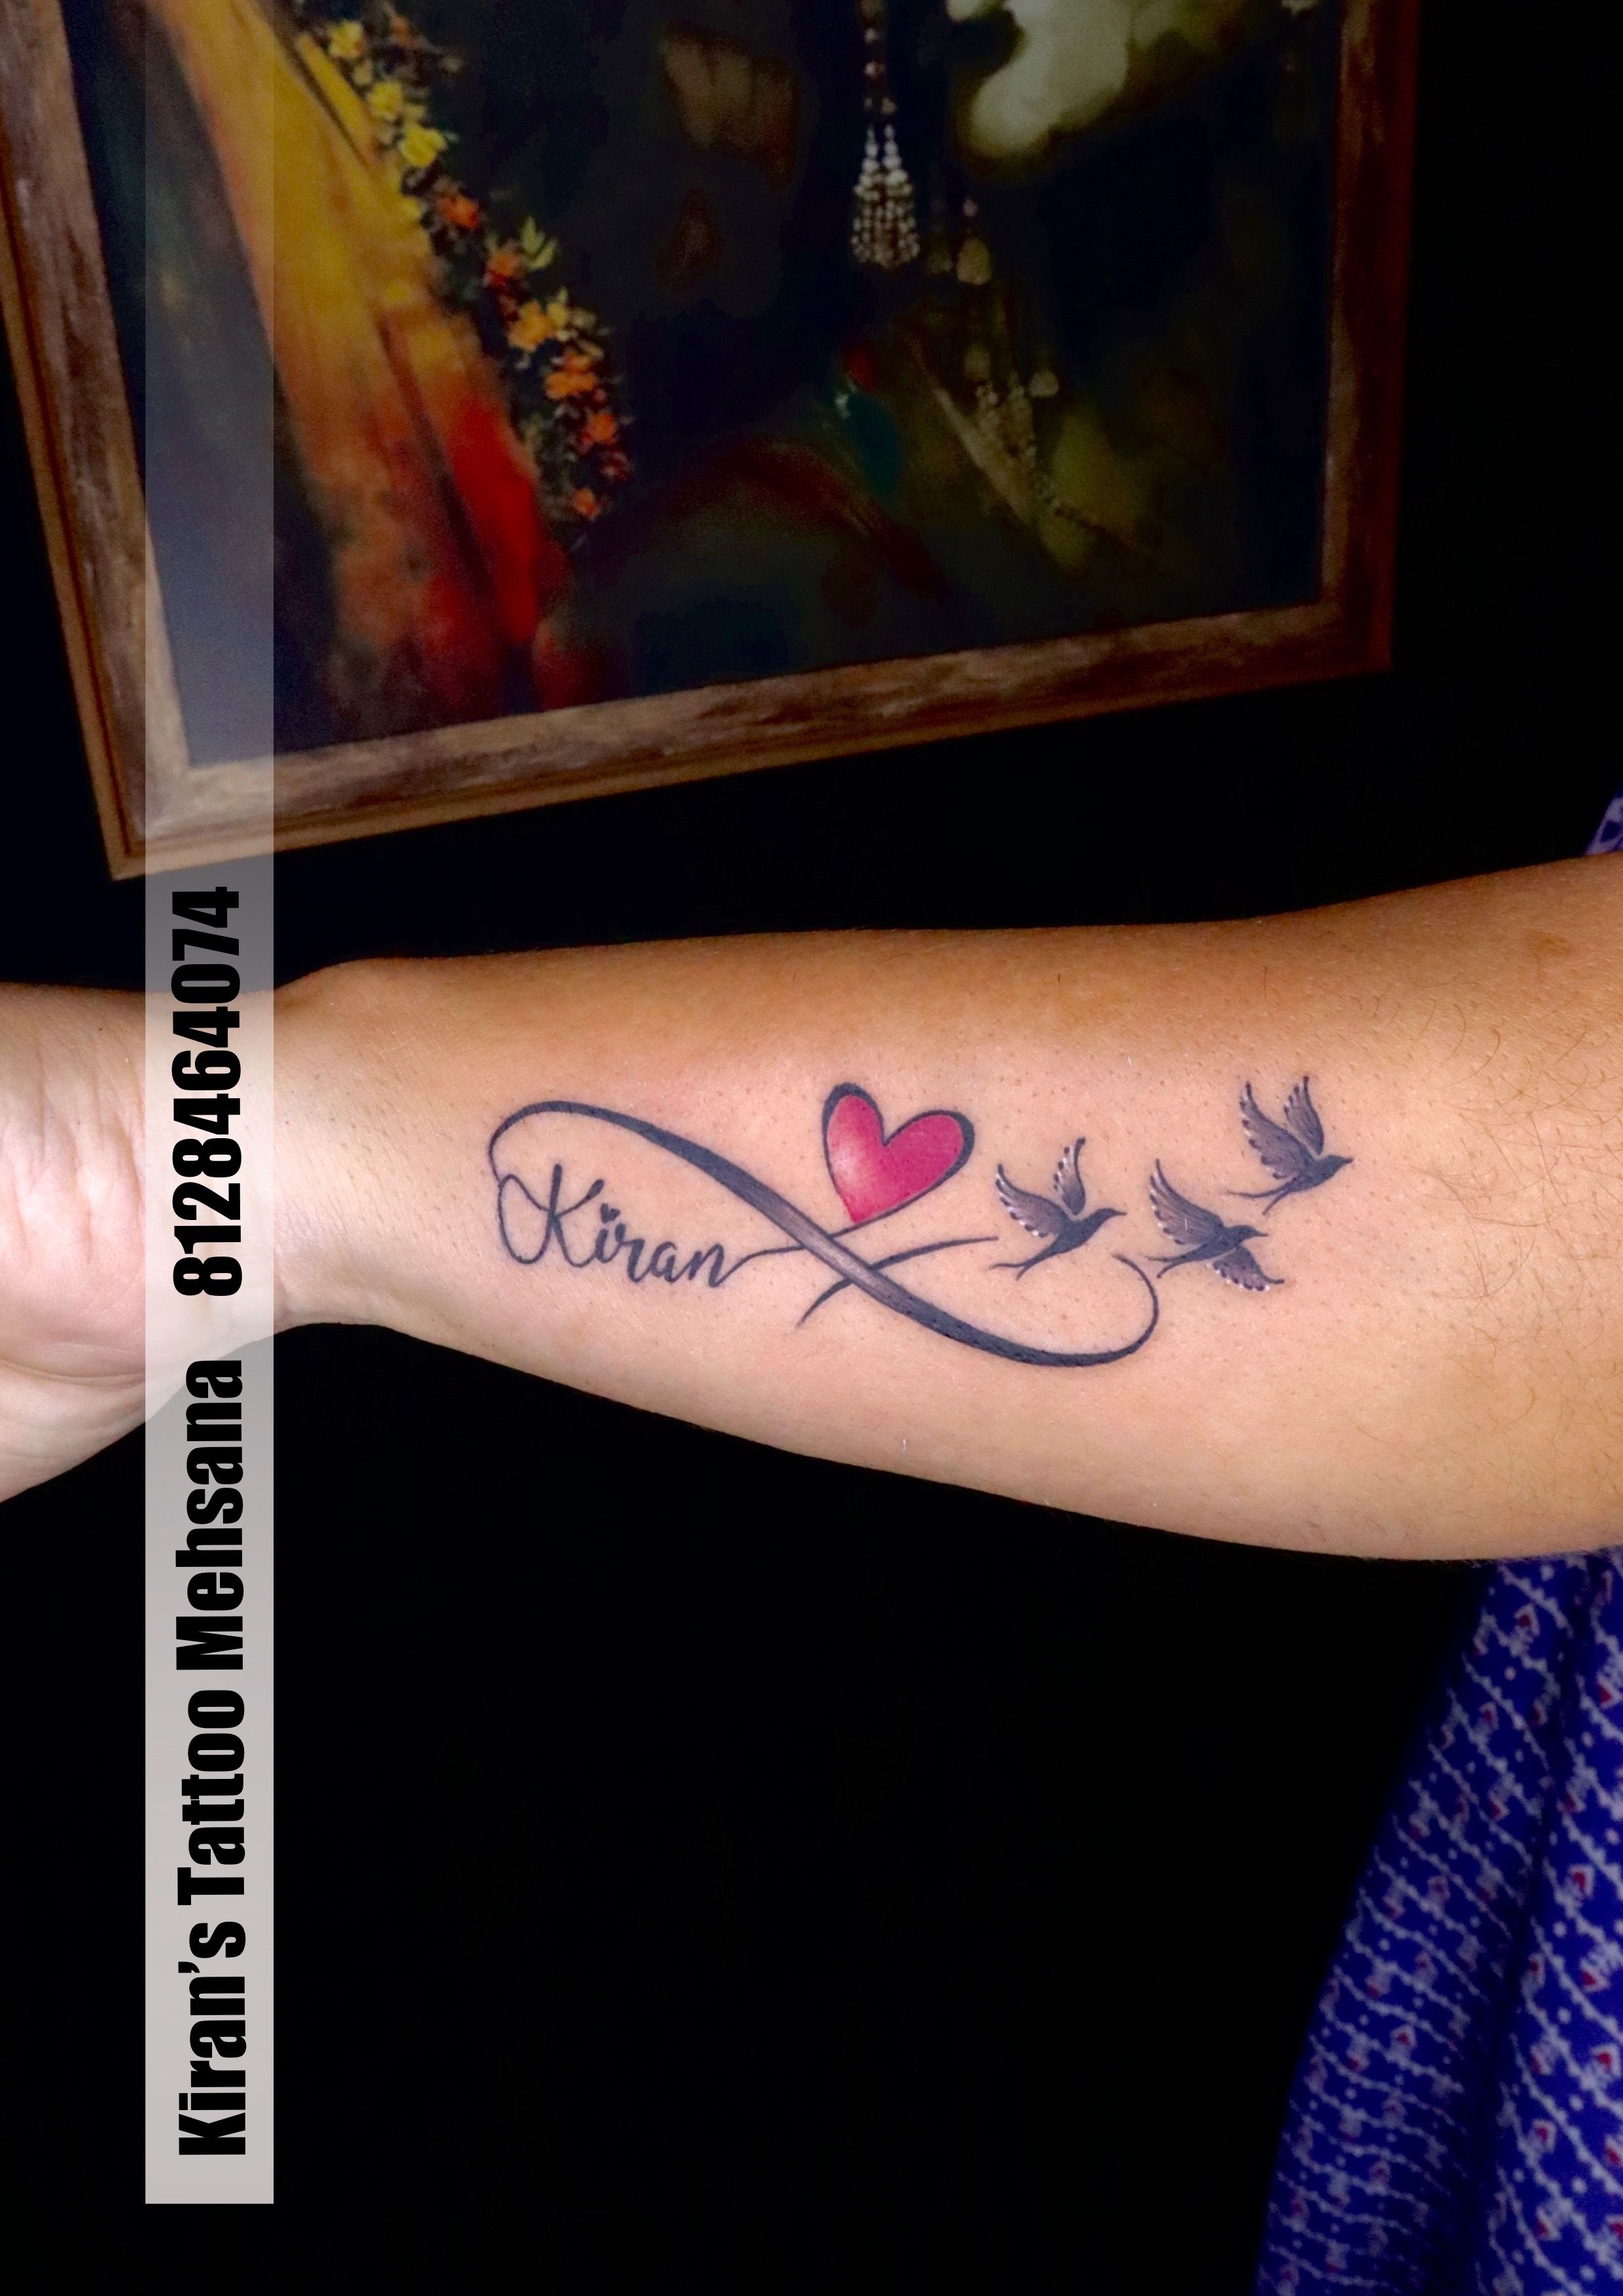 Kiran Tattoos in Arsikere,Hassan - Best Tattoo Artists in Hassan - Justdial